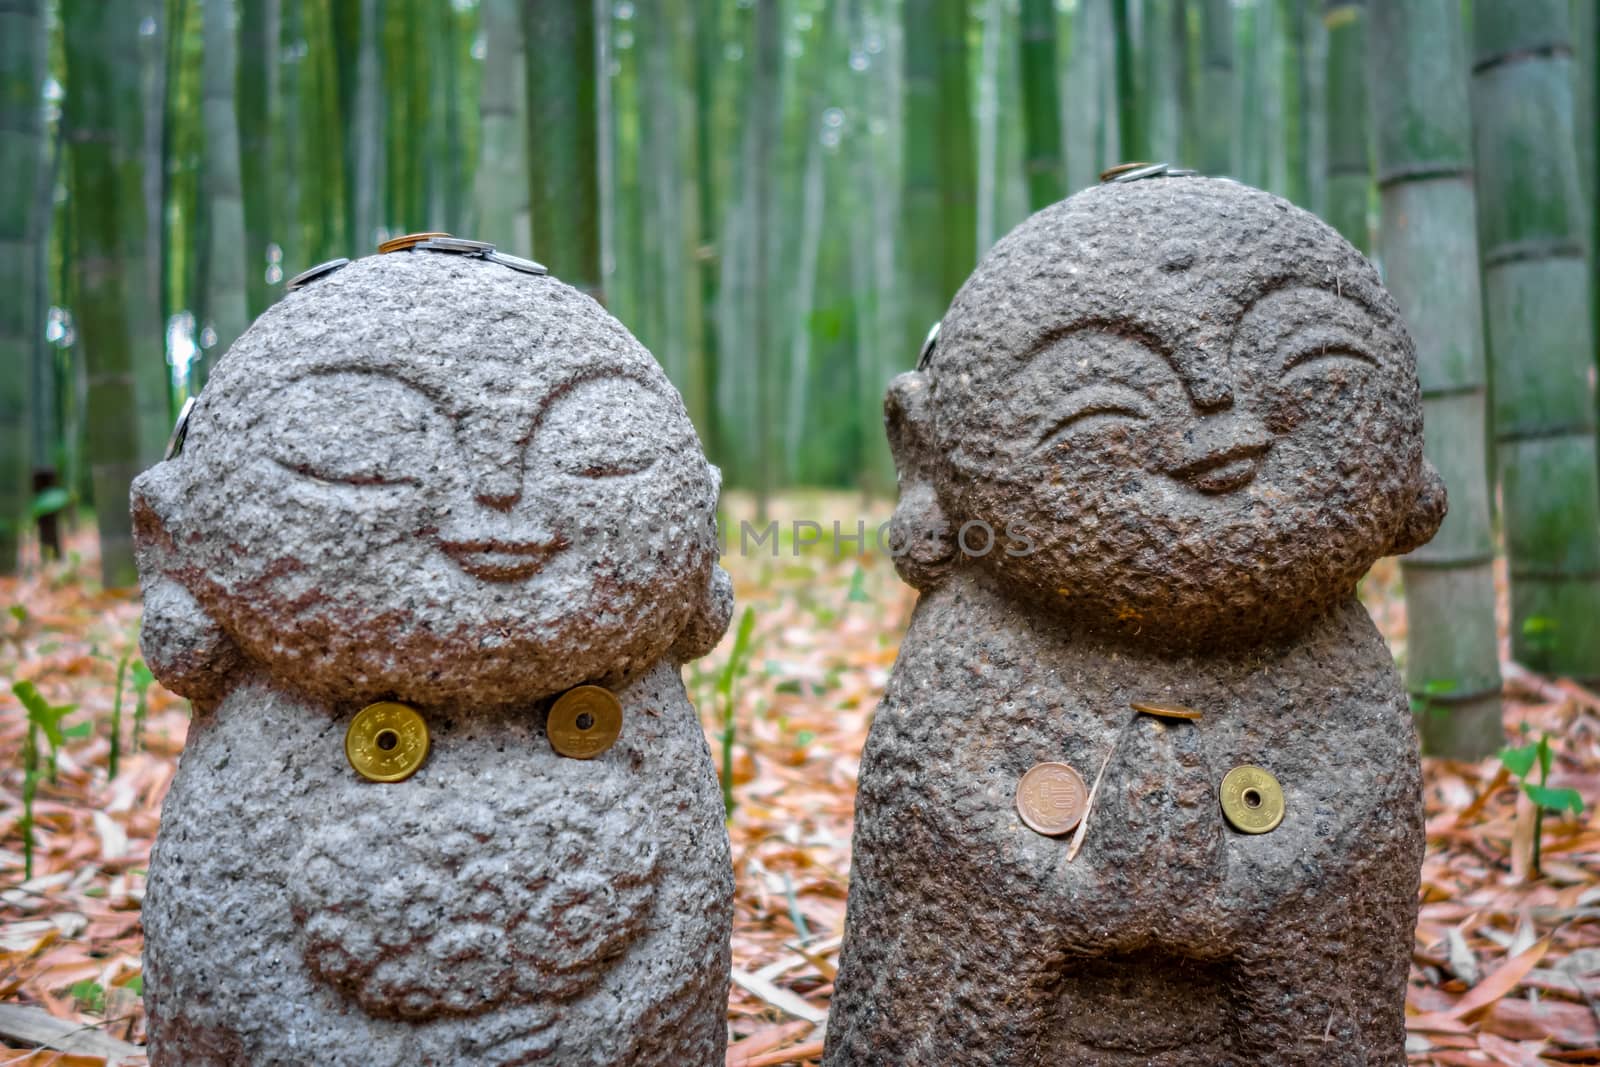 Jizo Statues in Arashiyama bamboo forest, Kyoto, Japan by daboost